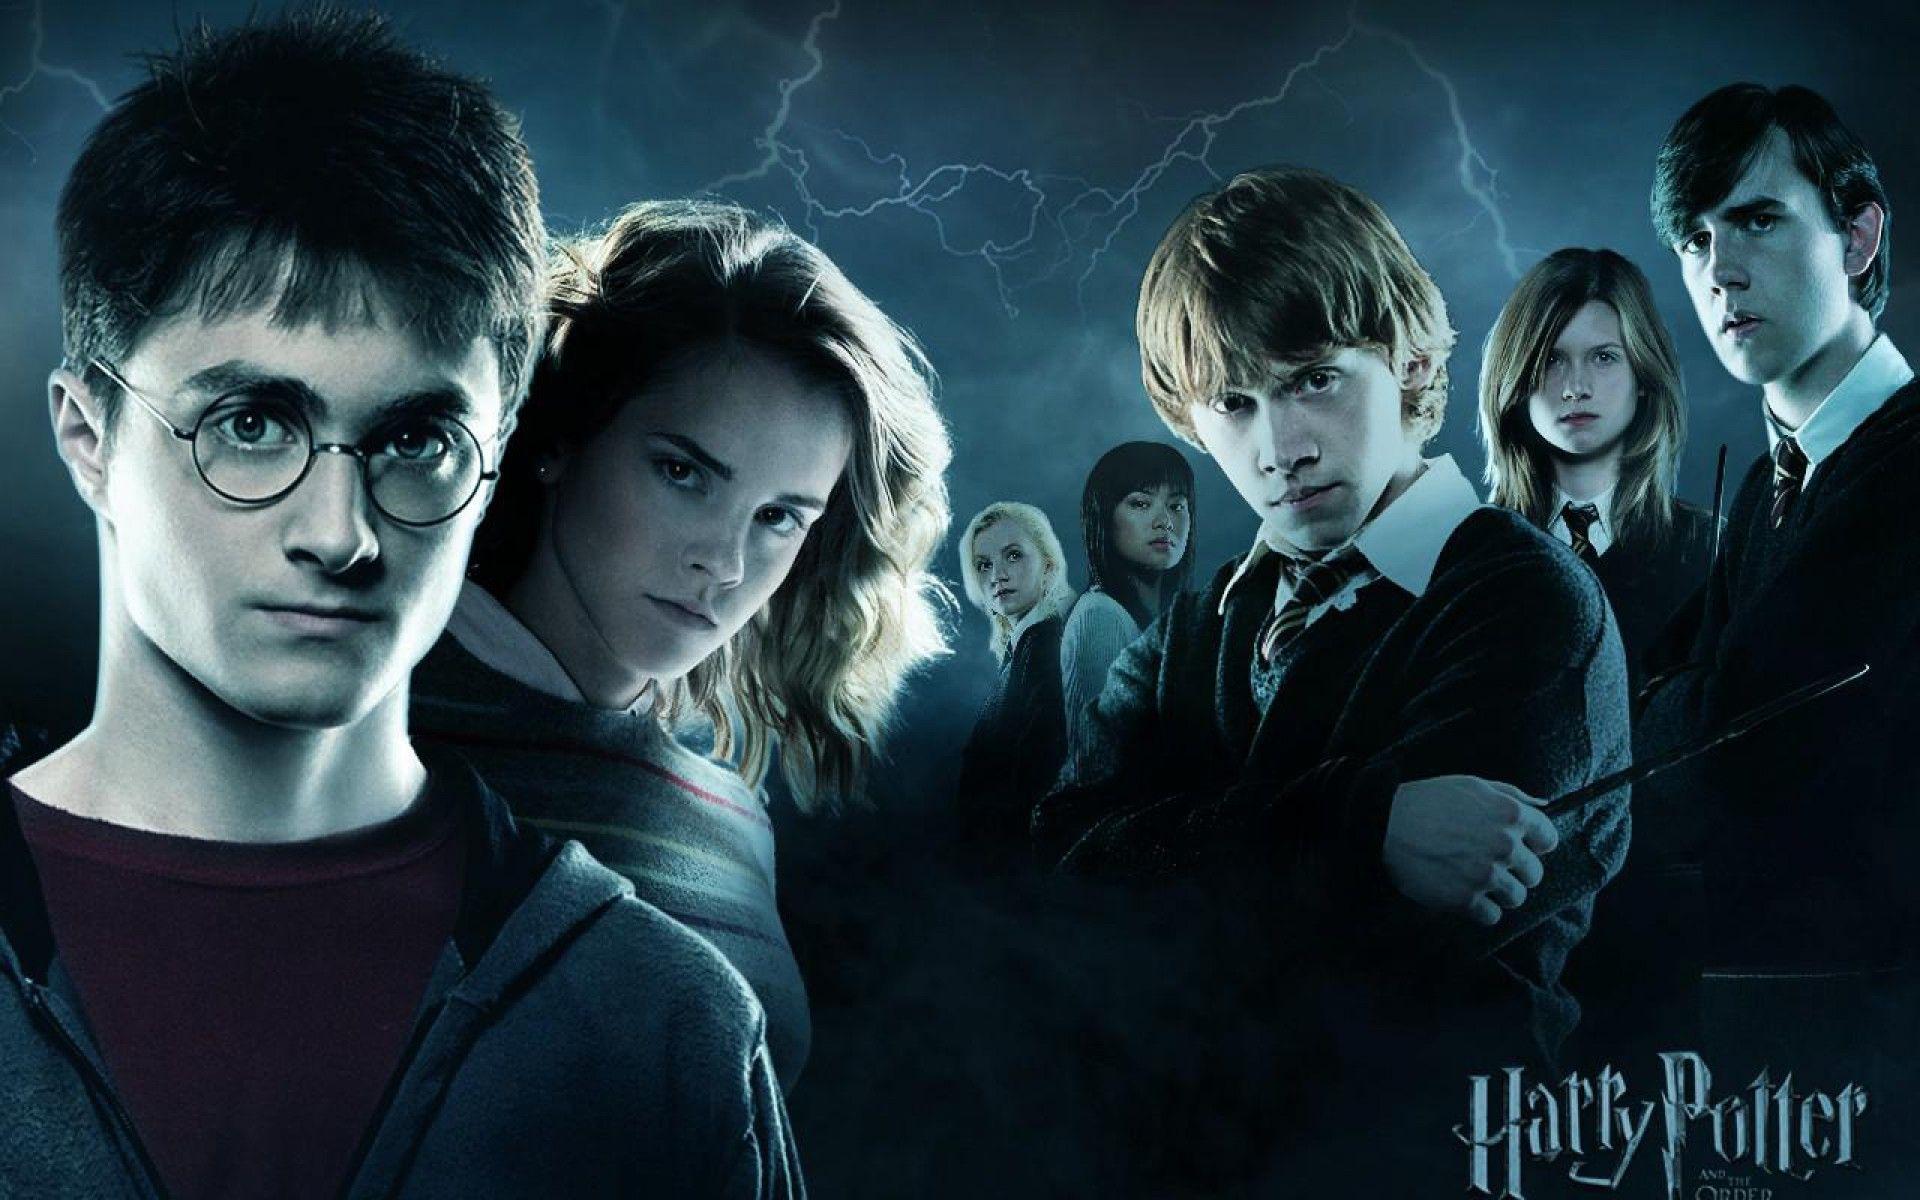 Harry Potter HD Wallpaper 1080P. Harry potter quiz, Harry potter characters, Harry potter image